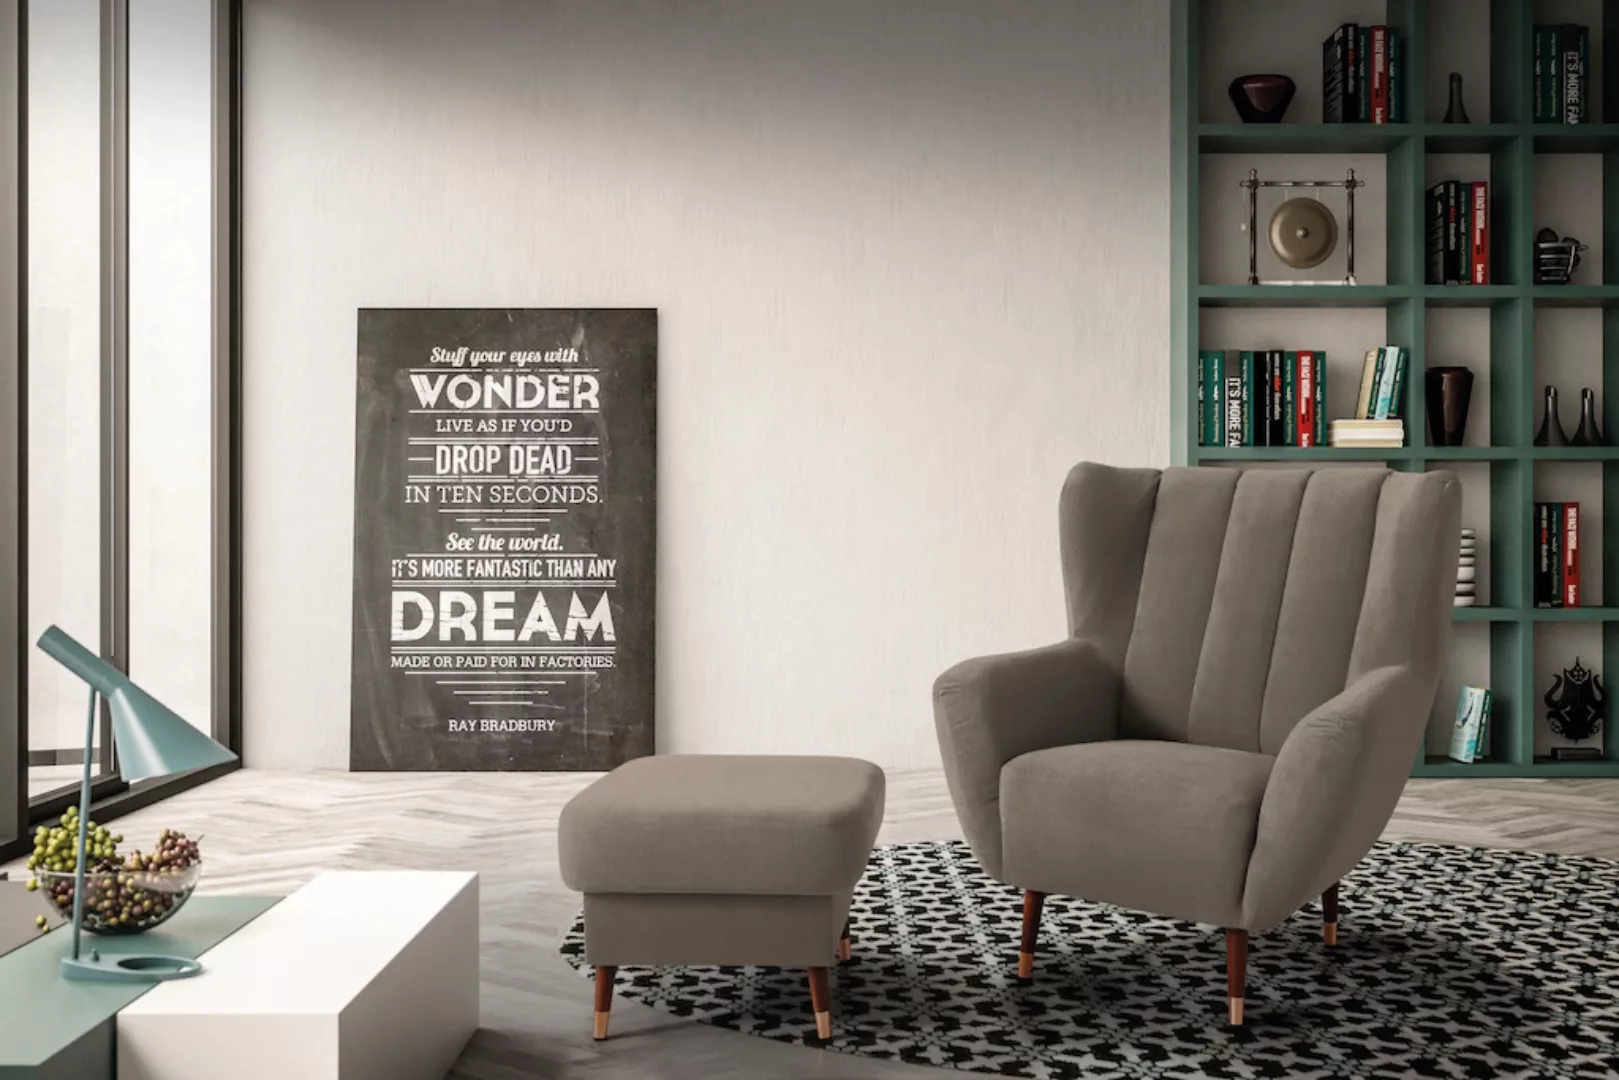 exxpo - sofa fashion Sessel "Polly" günstig online kaufen